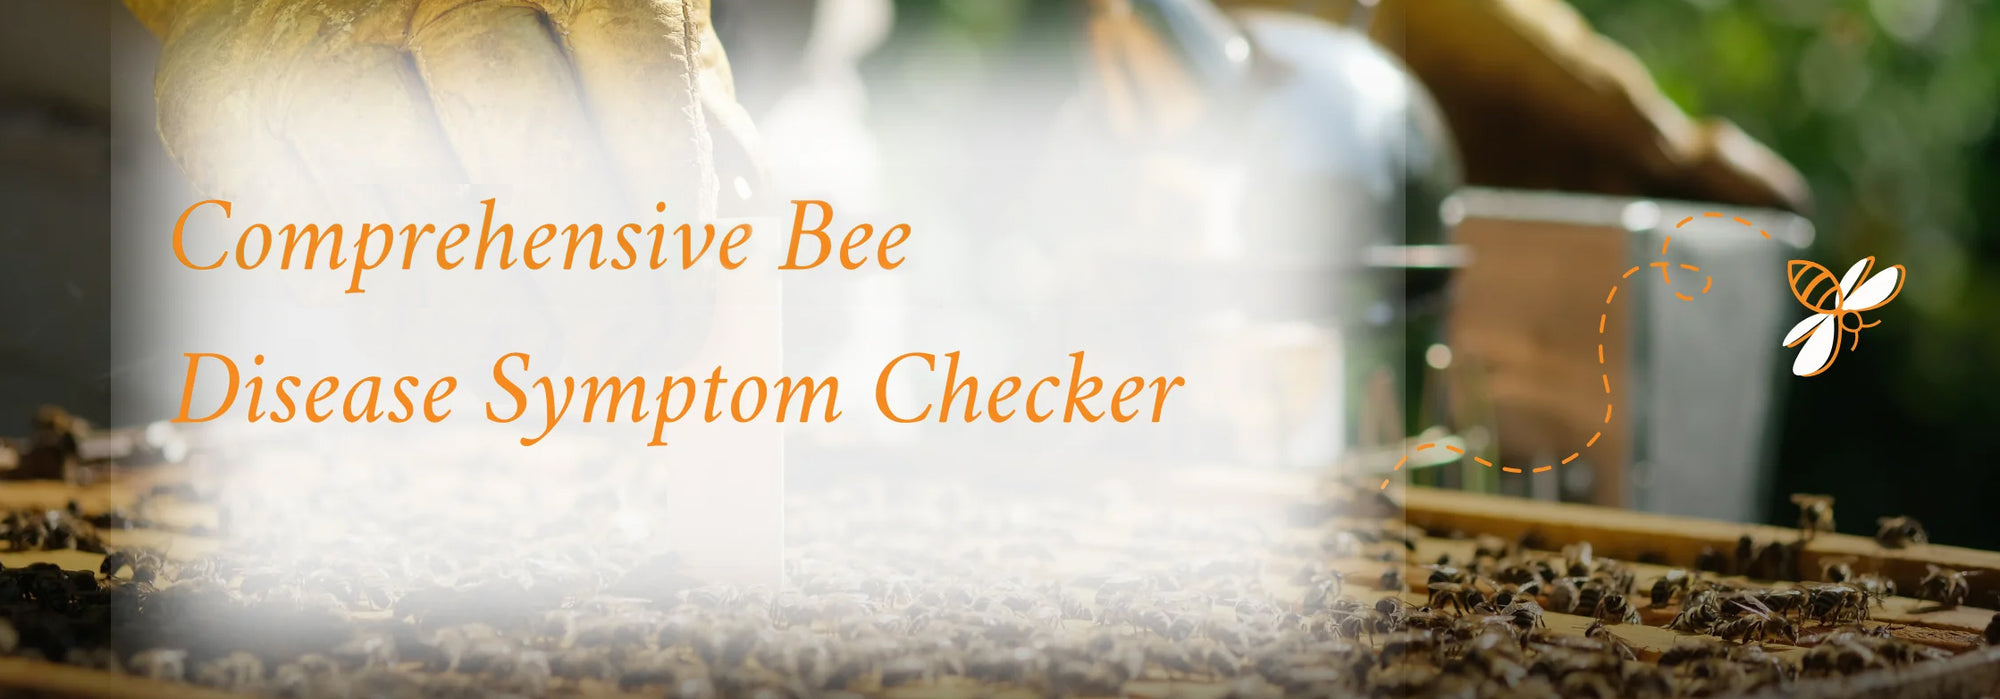 Comprehensive Bee Disease Symptom Checker